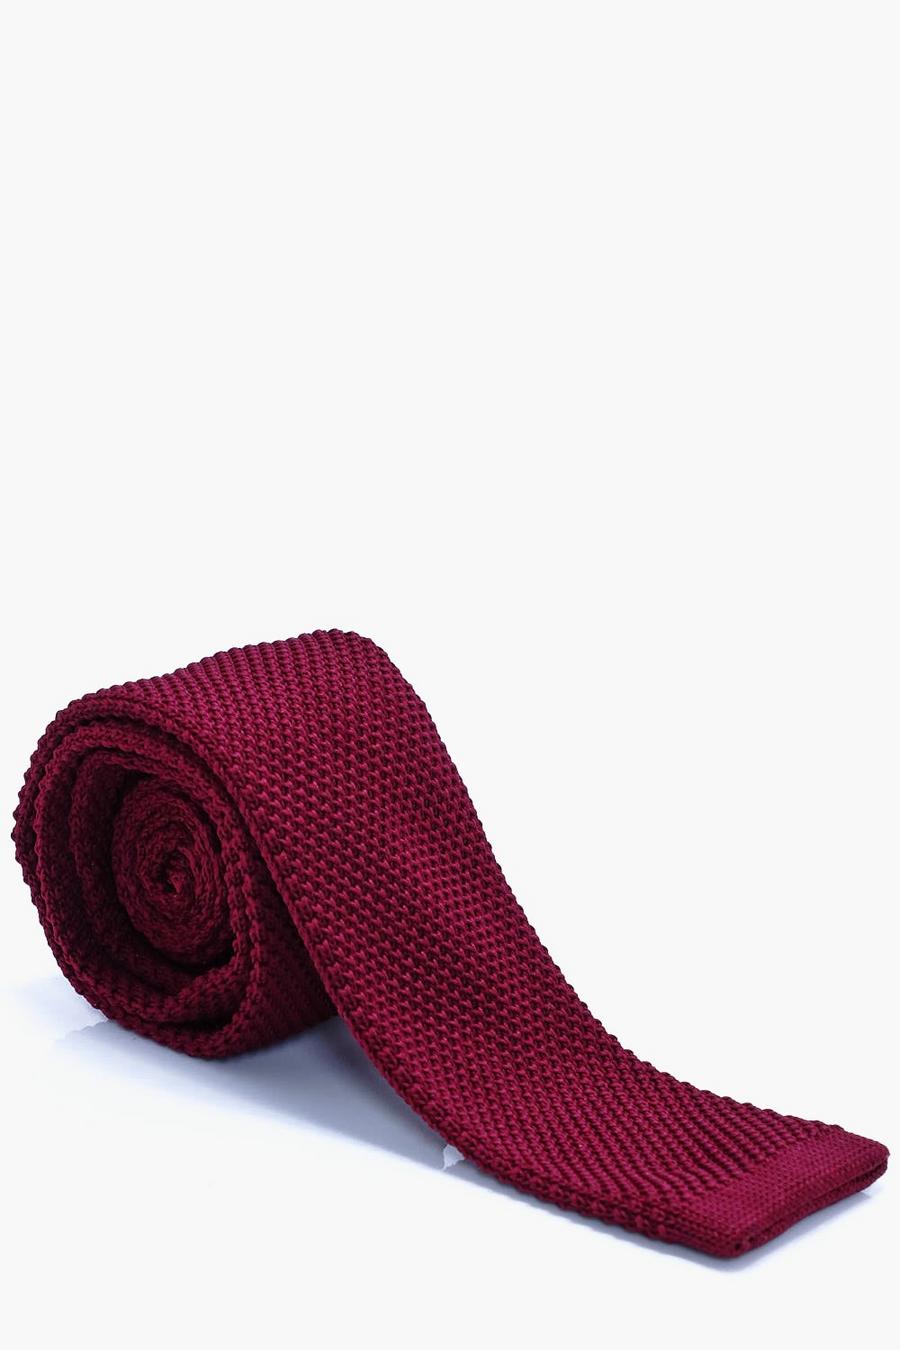 Burgundy Skinny Knitted Tie image number 1